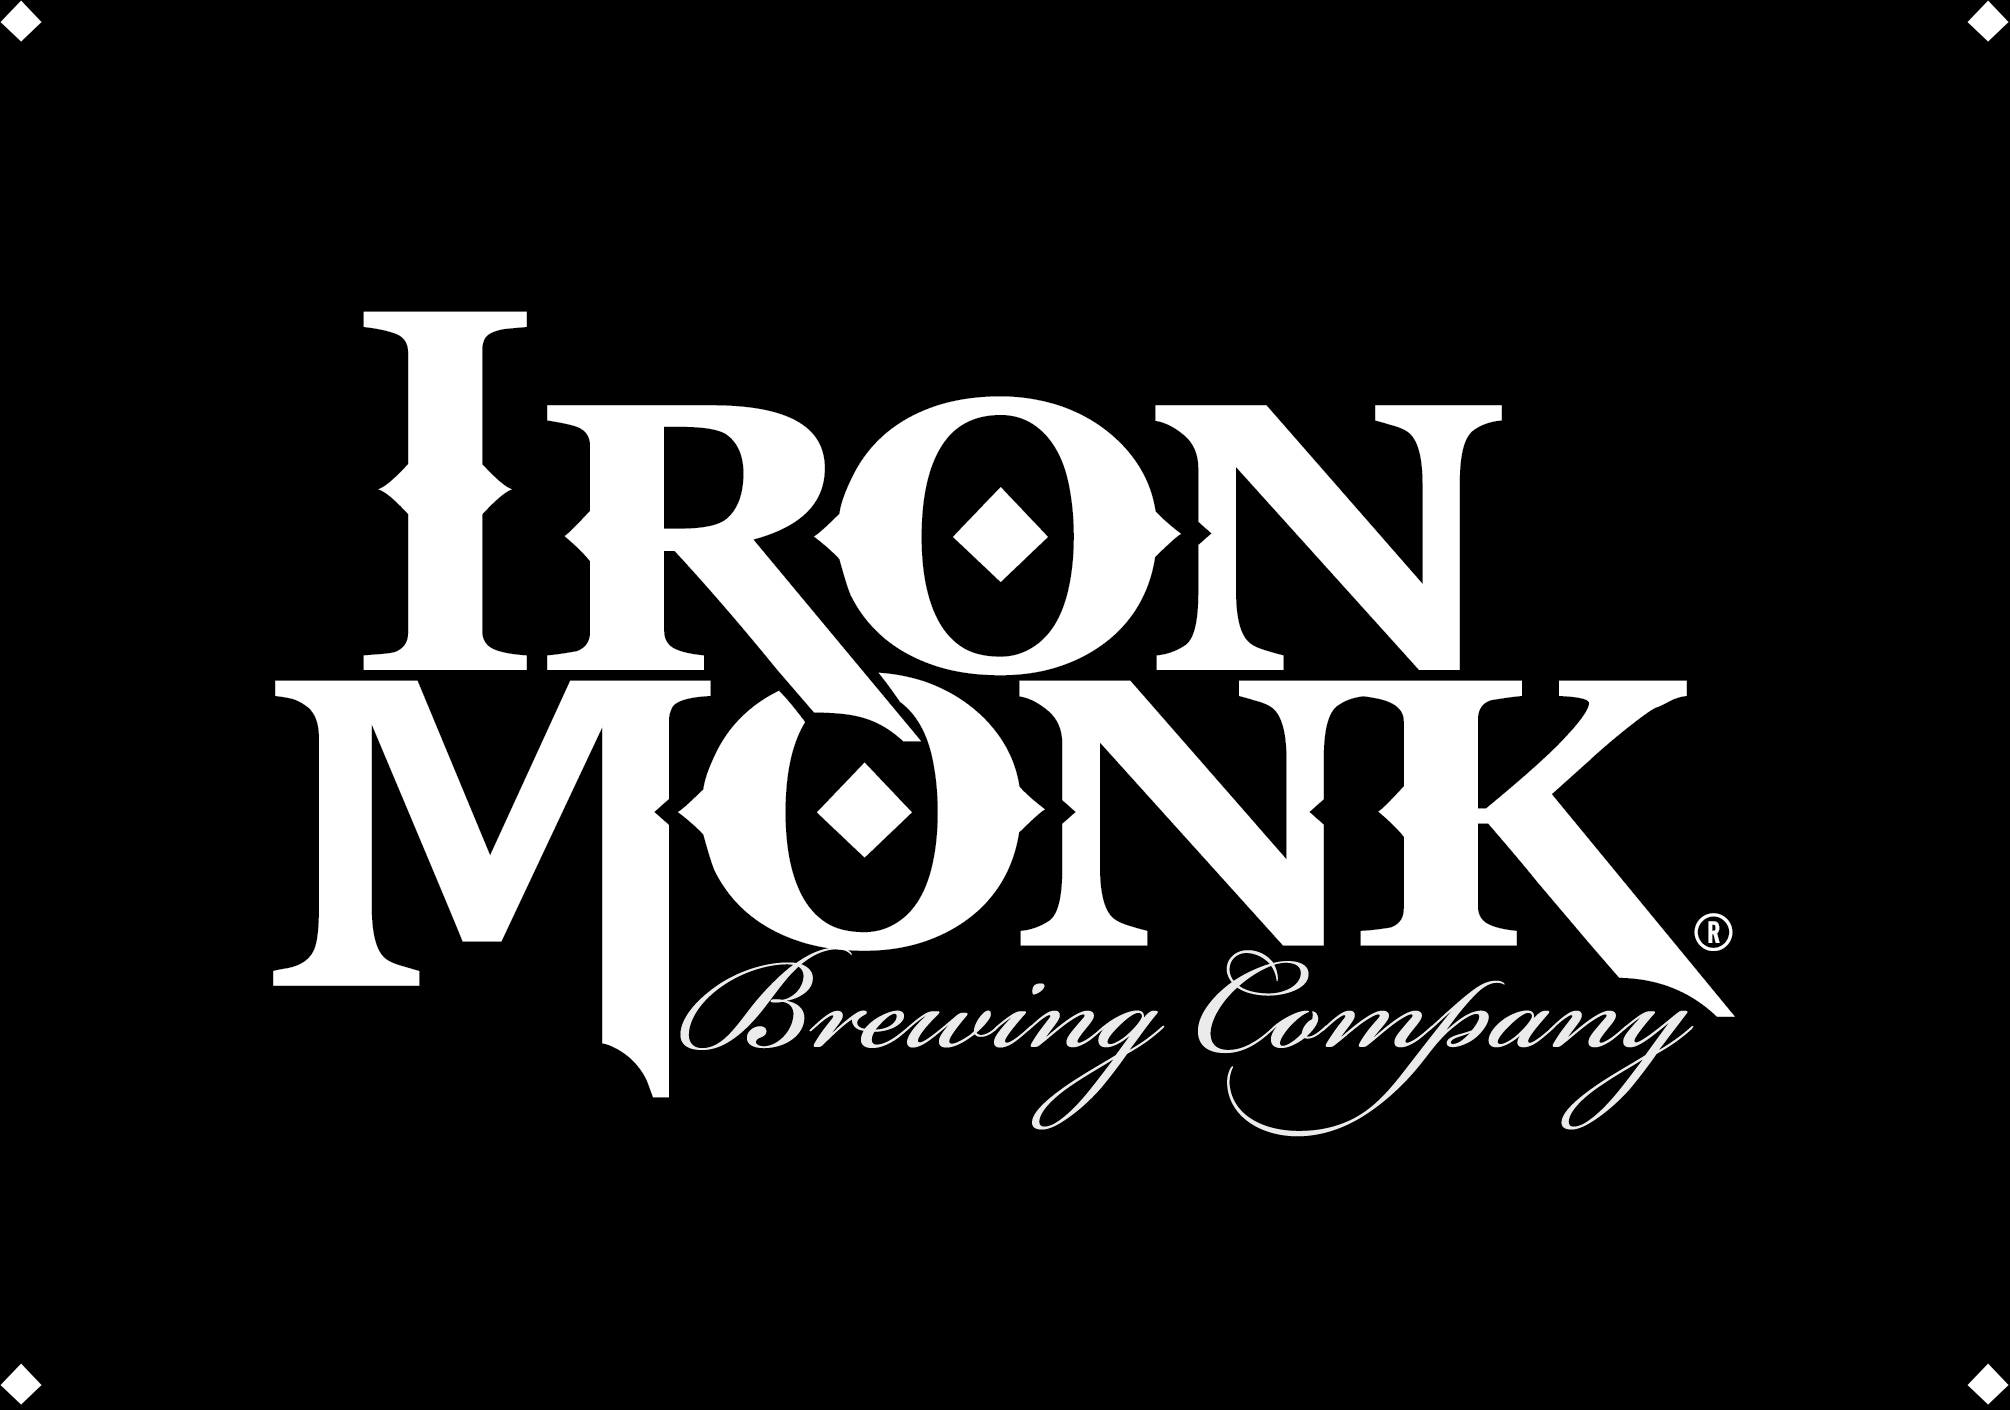 Logo of Iron Monk brewery